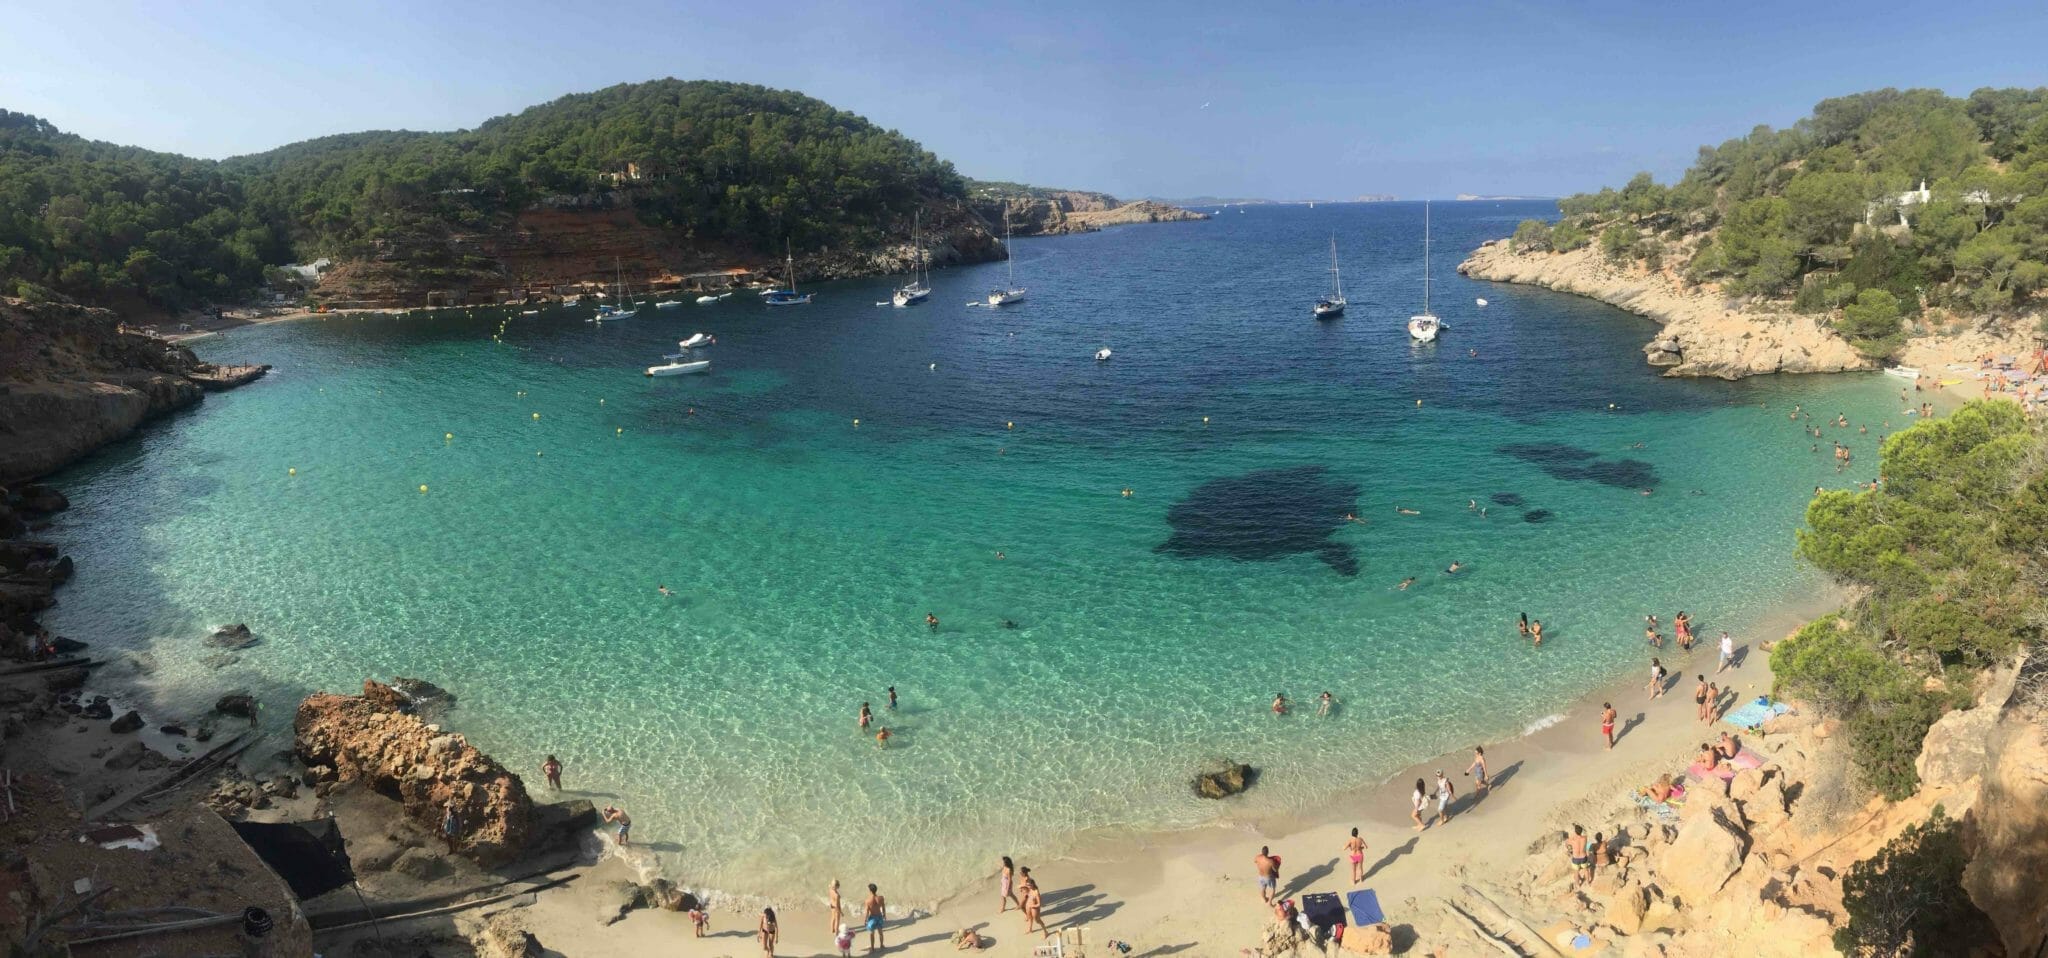 7 Reasons to Love Ibiza - 7 Continents 1 Passport